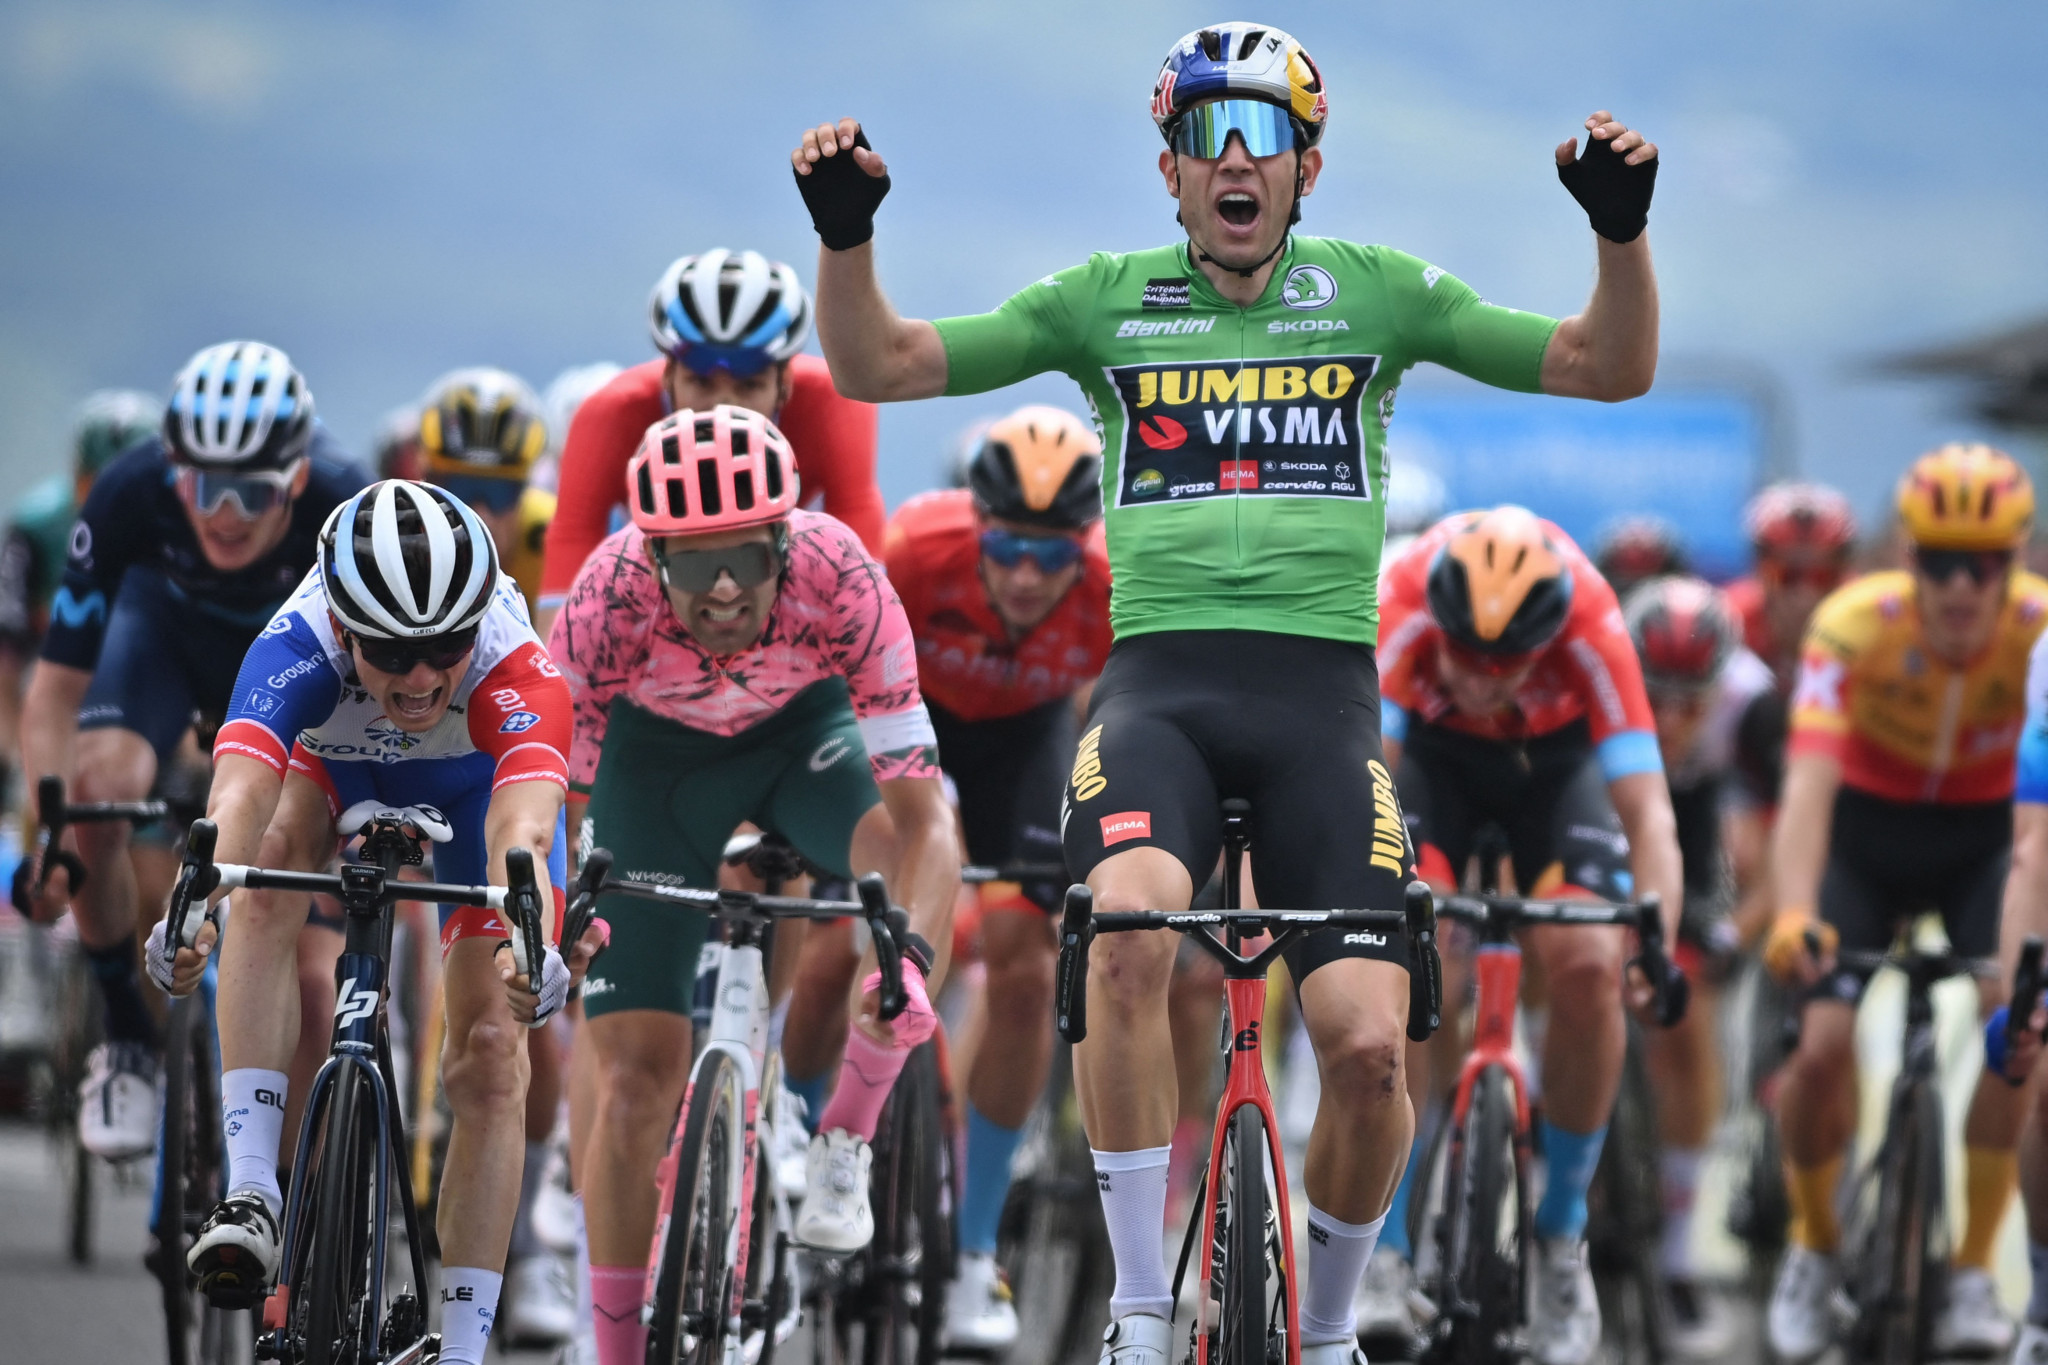 Van Aert retakes yellow jersey in third stage of Critérium du Dauphiné 